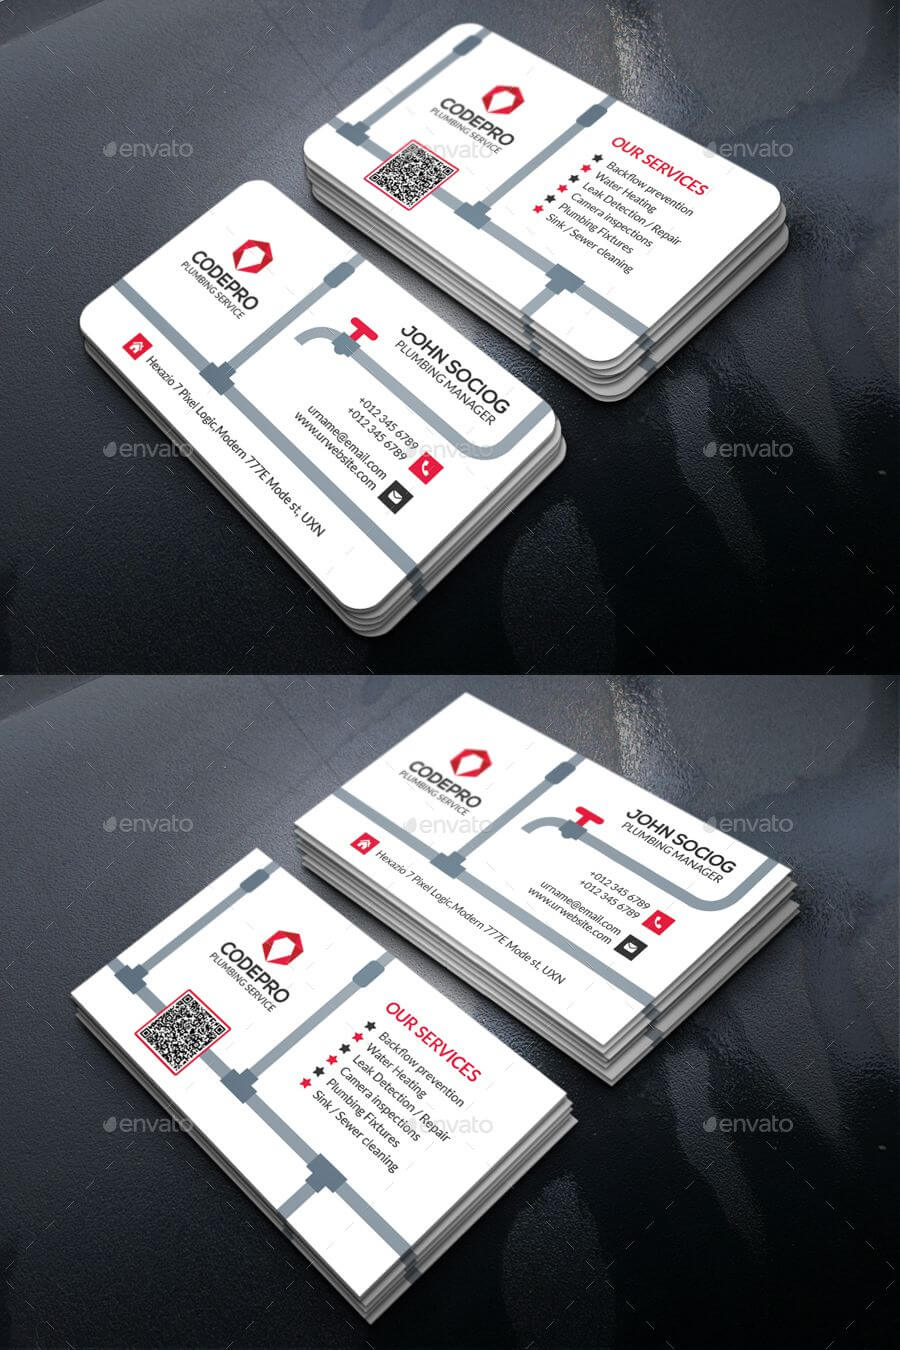 Plumbing Business Card Template Psd | Make Business Cards Within Business Card Maker Template